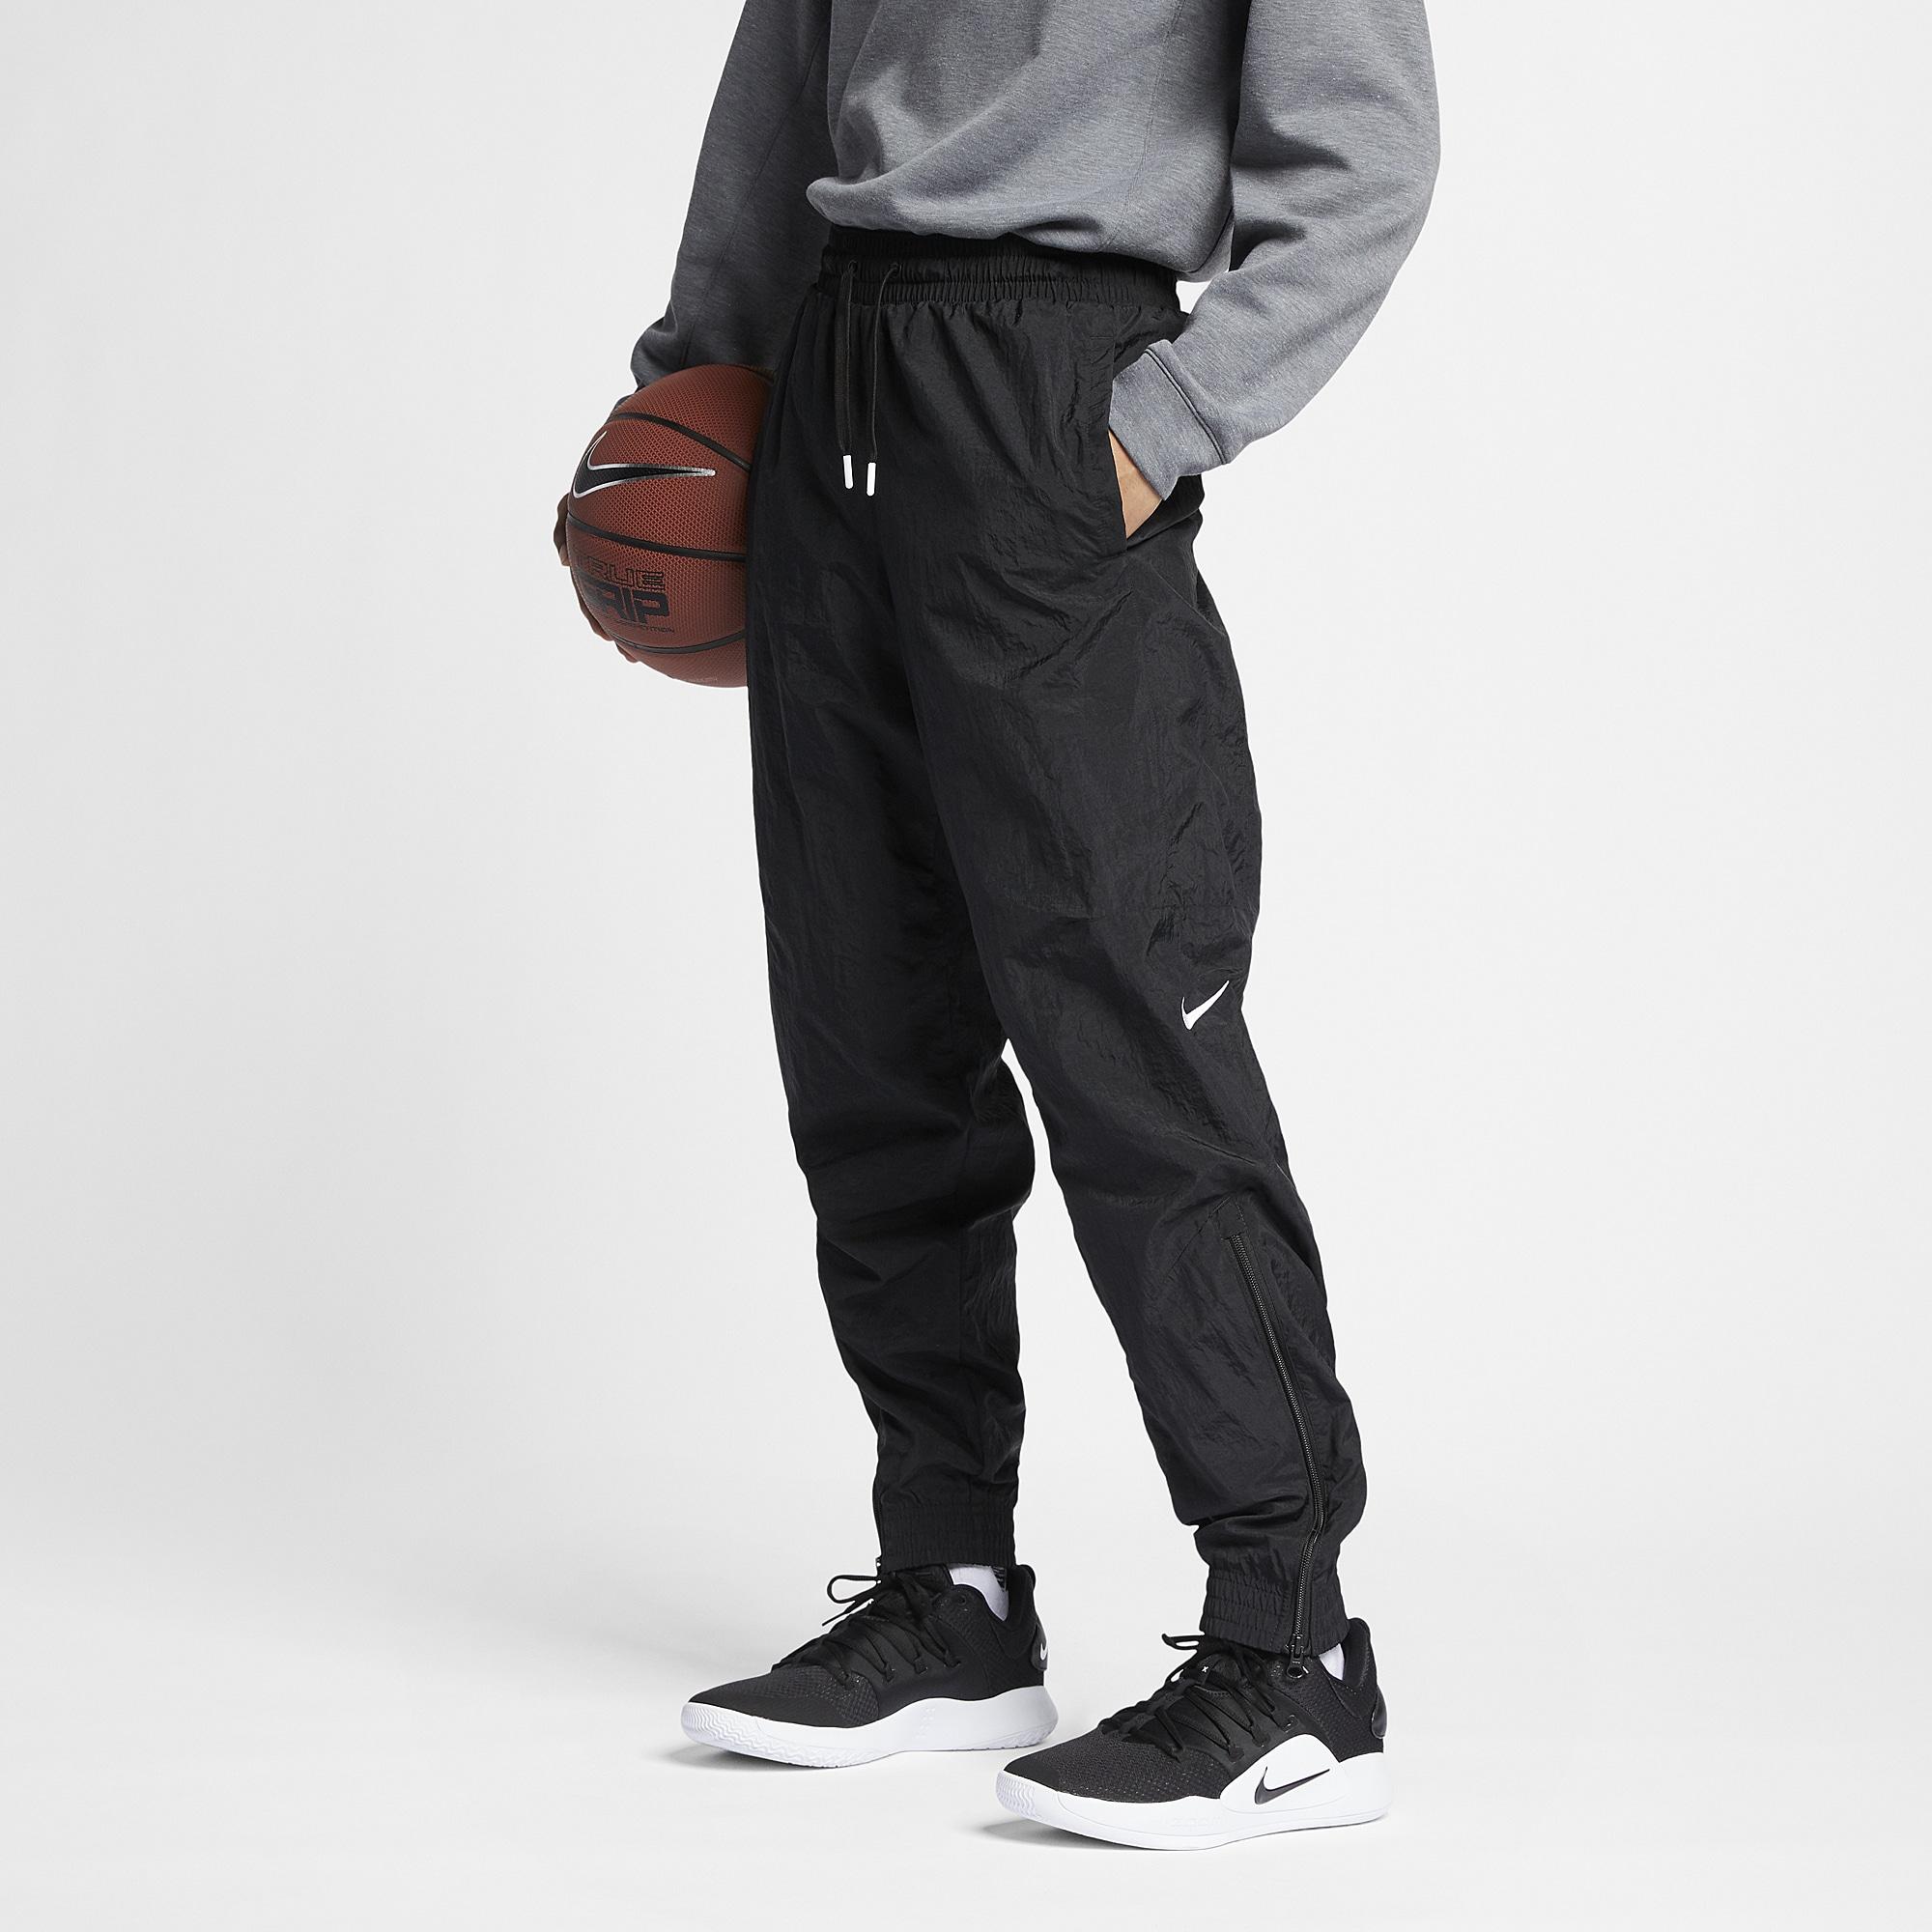 Nike Synthetic Woven Pants in Black/White (Black) for Men - Lyst